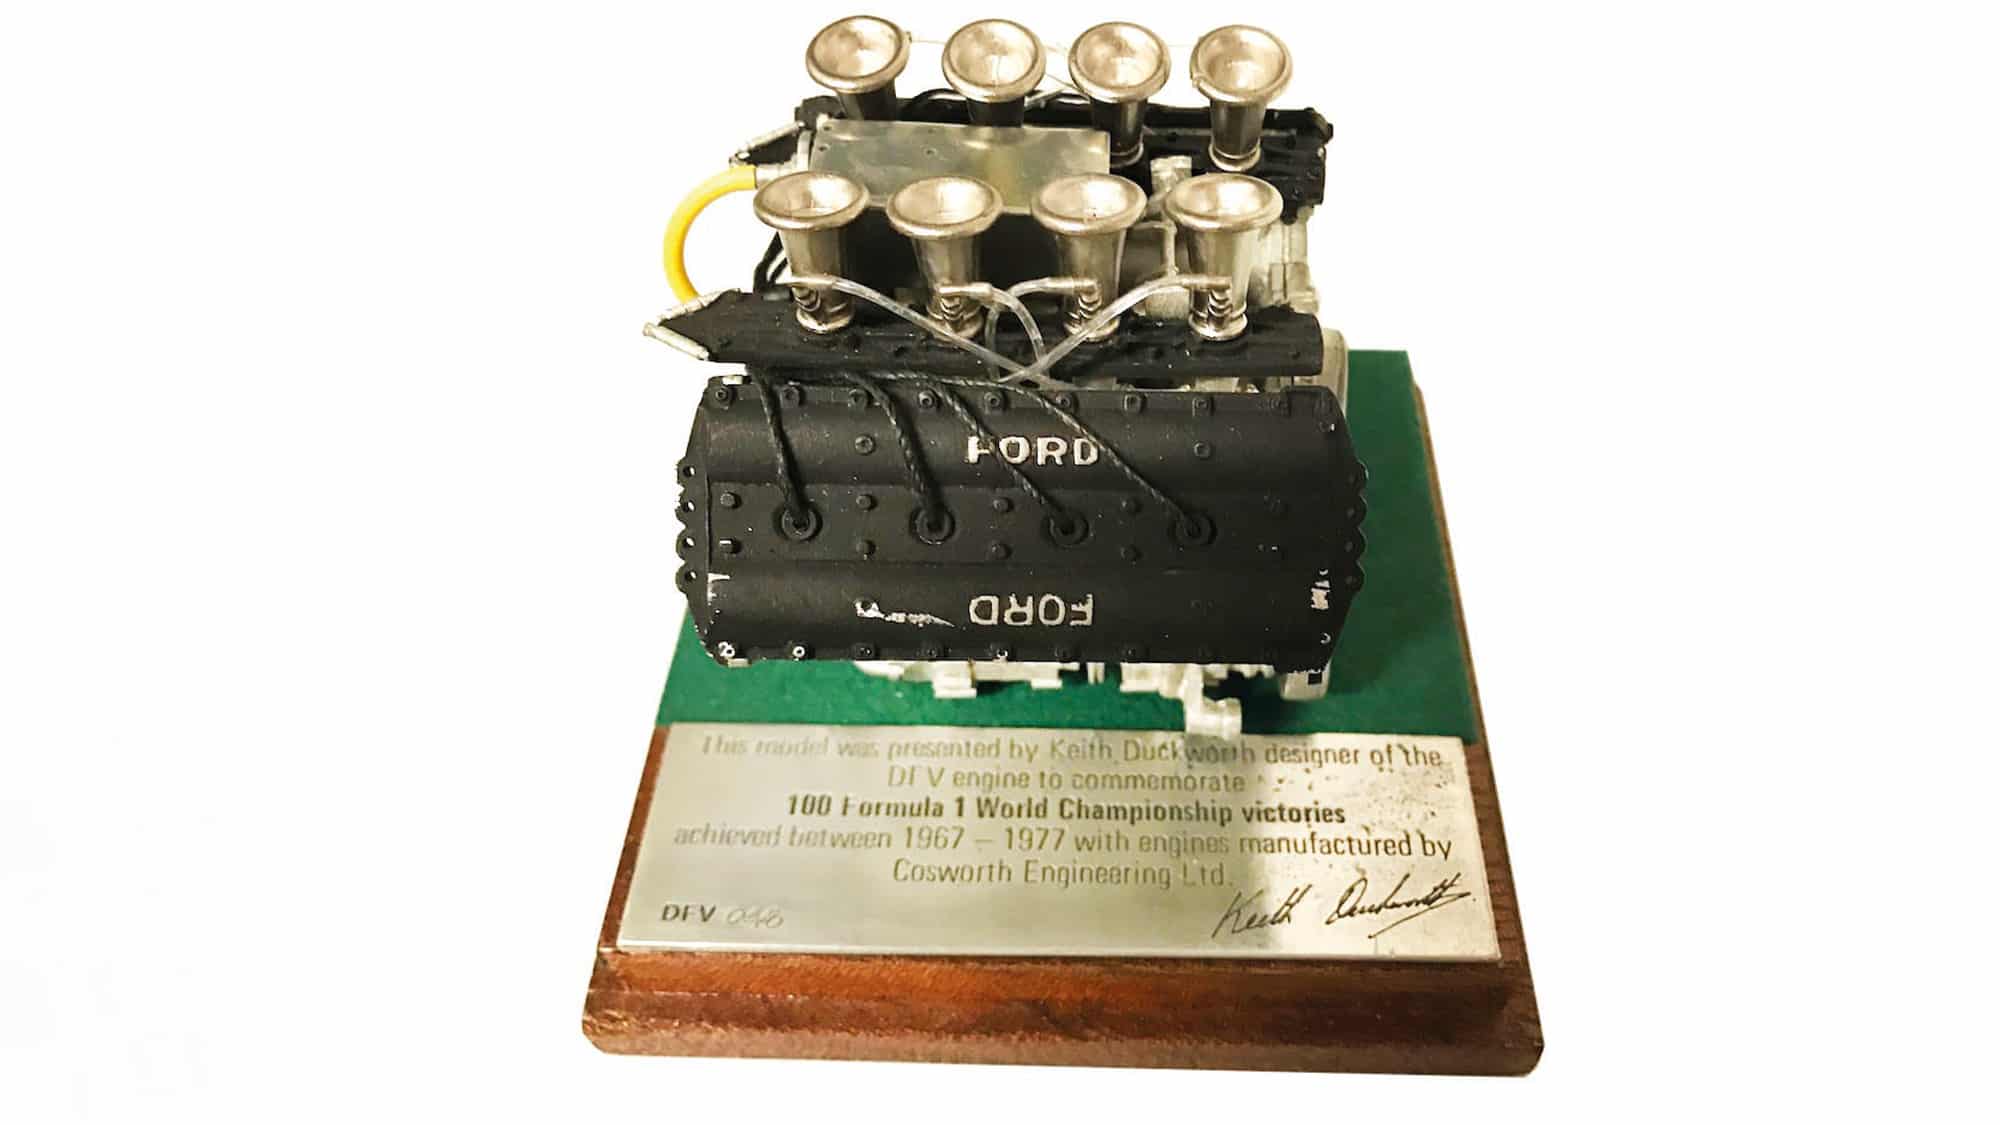 Keith Duckworth engine model